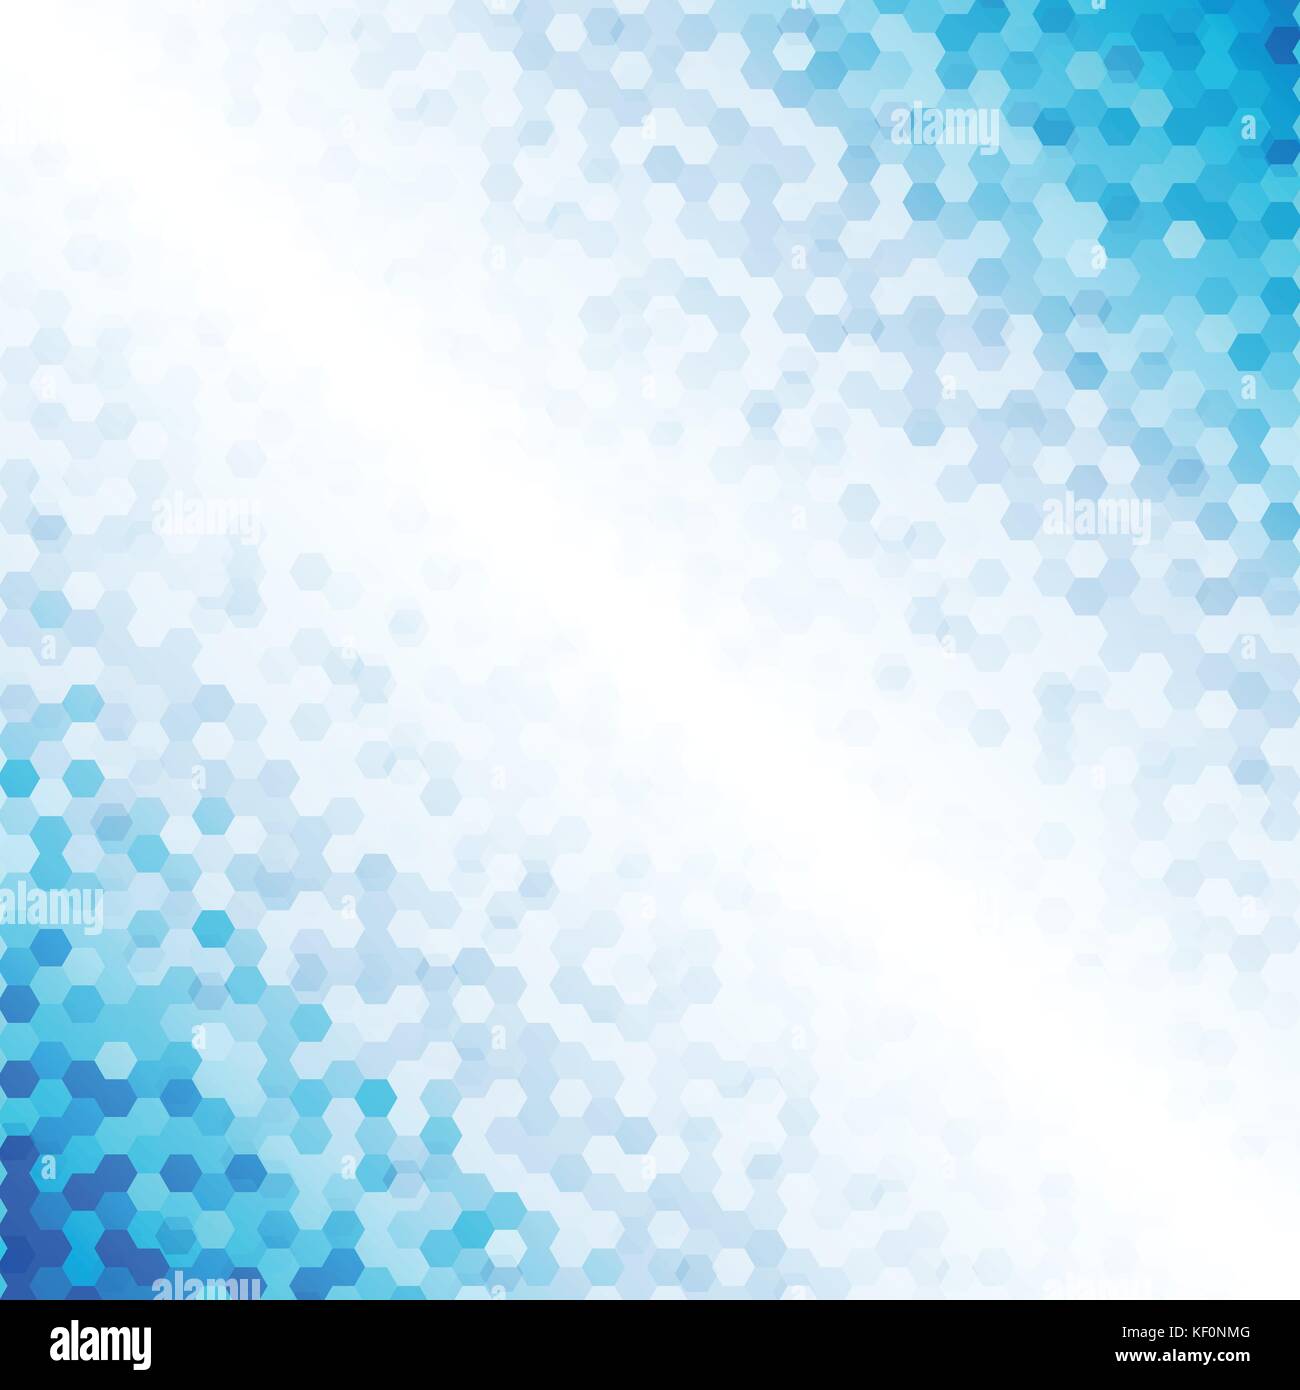 Blau hexagon Muster abstrakt hintergrund Konzept Stock Vektor